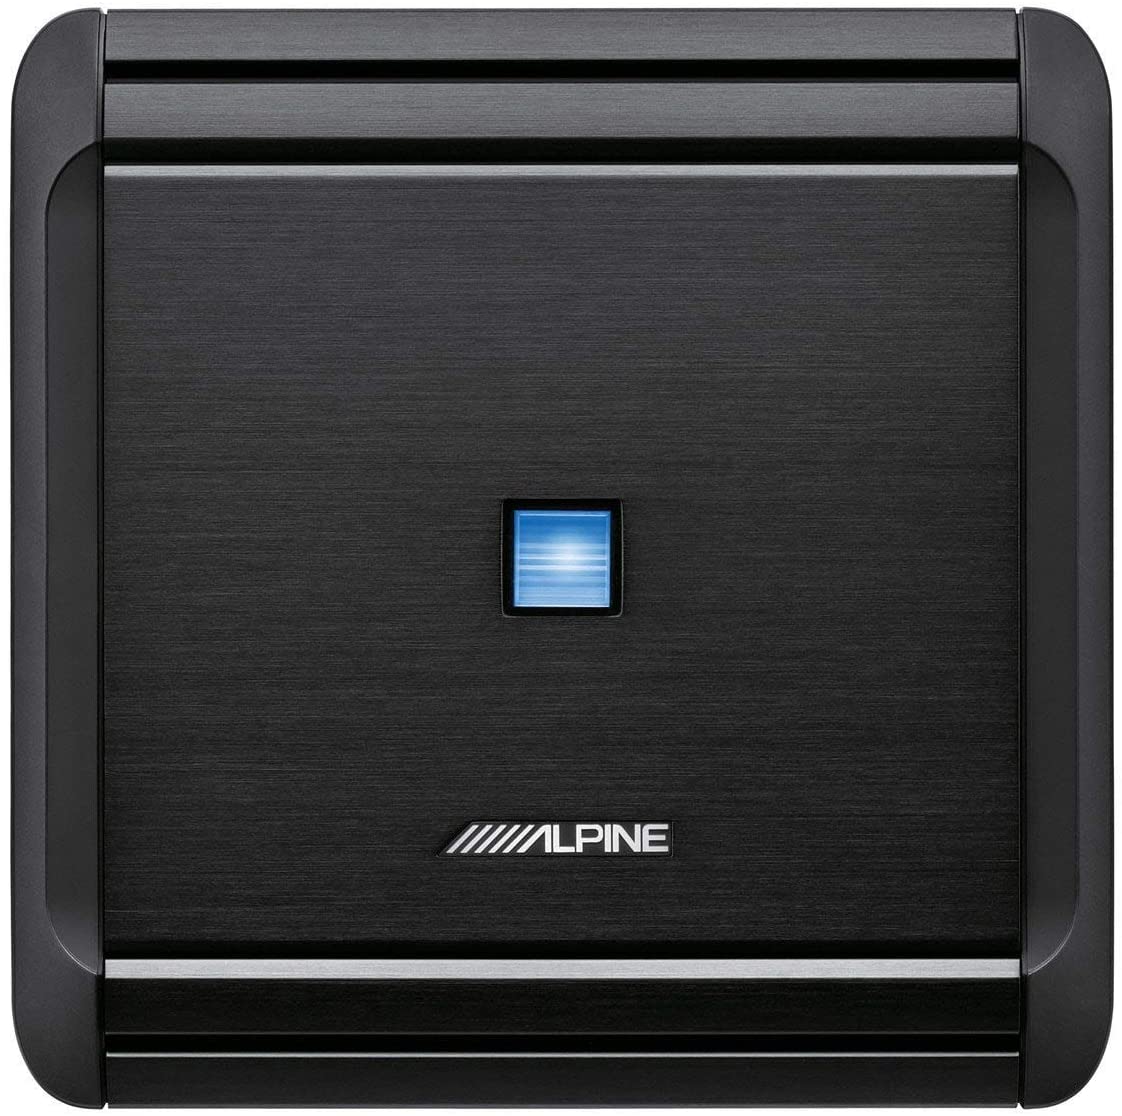 Alpine MRV-F300 – Best Affordable Amp for 6×9 Speakers